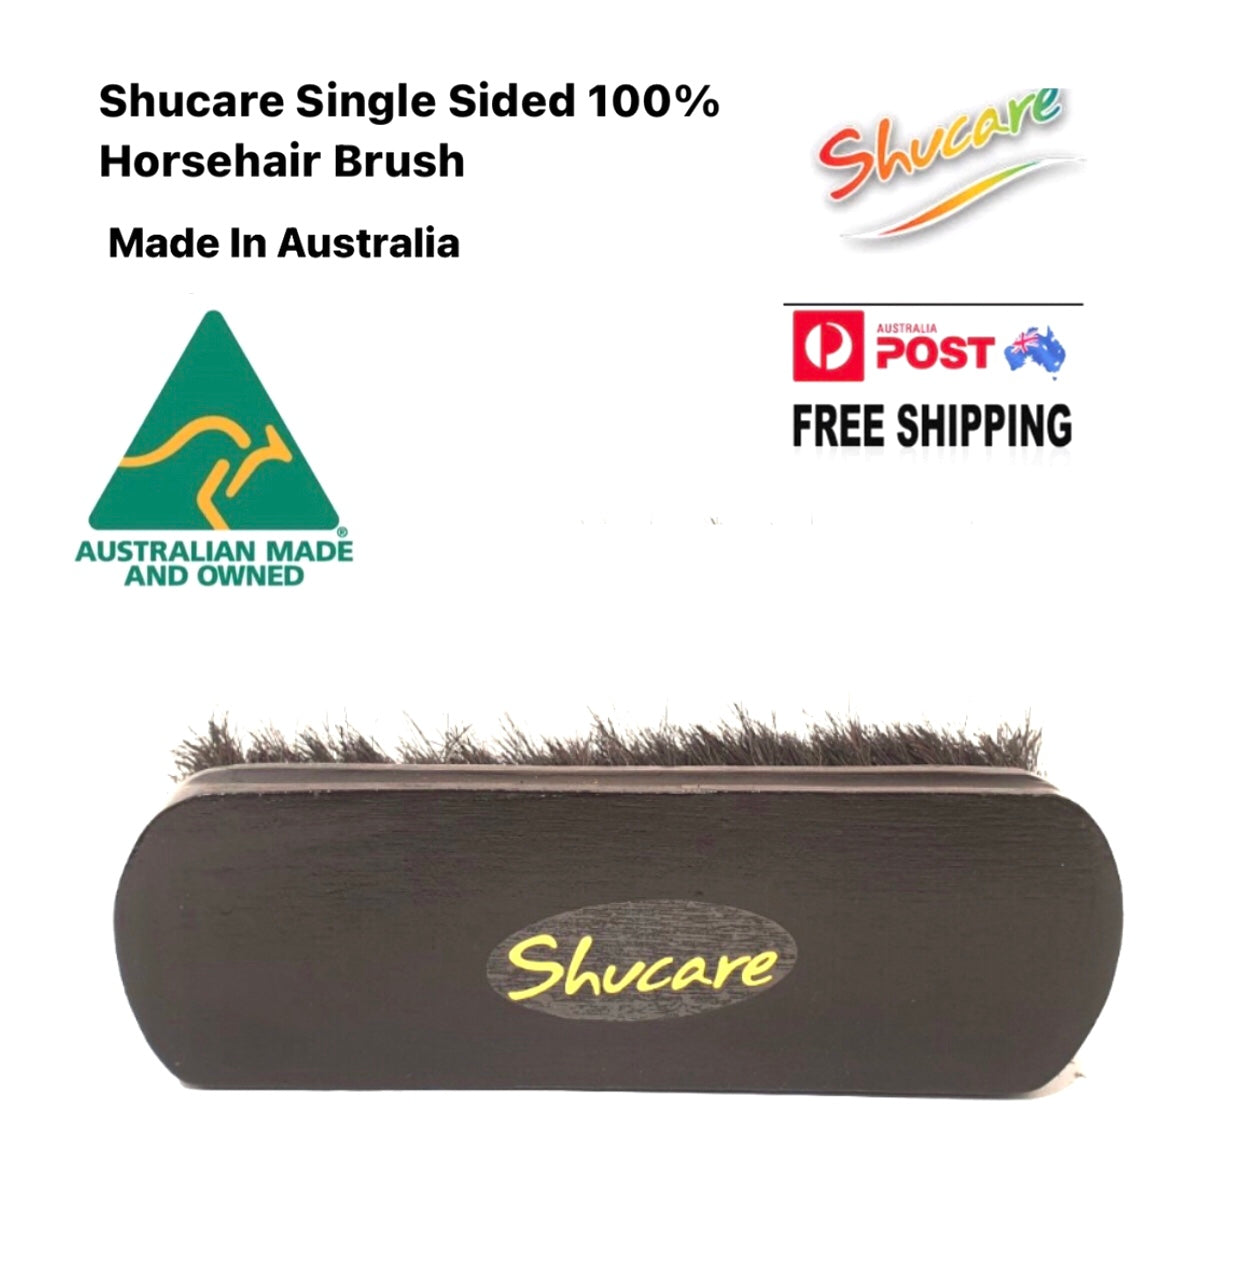 Shucare Single Sided 100% Horse Hair Brush 7.5 Inch Made In Australia